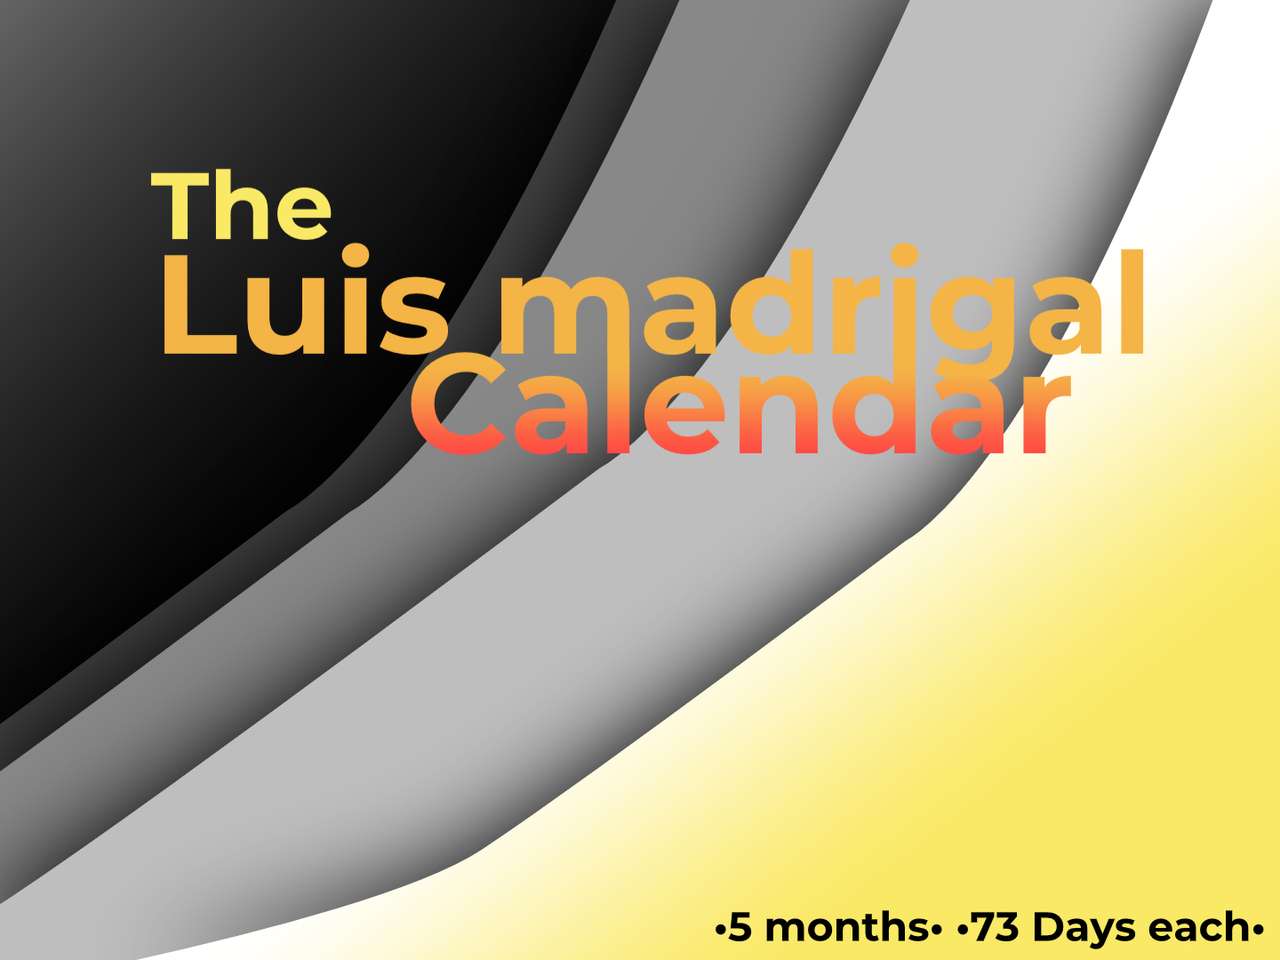 Luis Madrigal naptár online puzzle